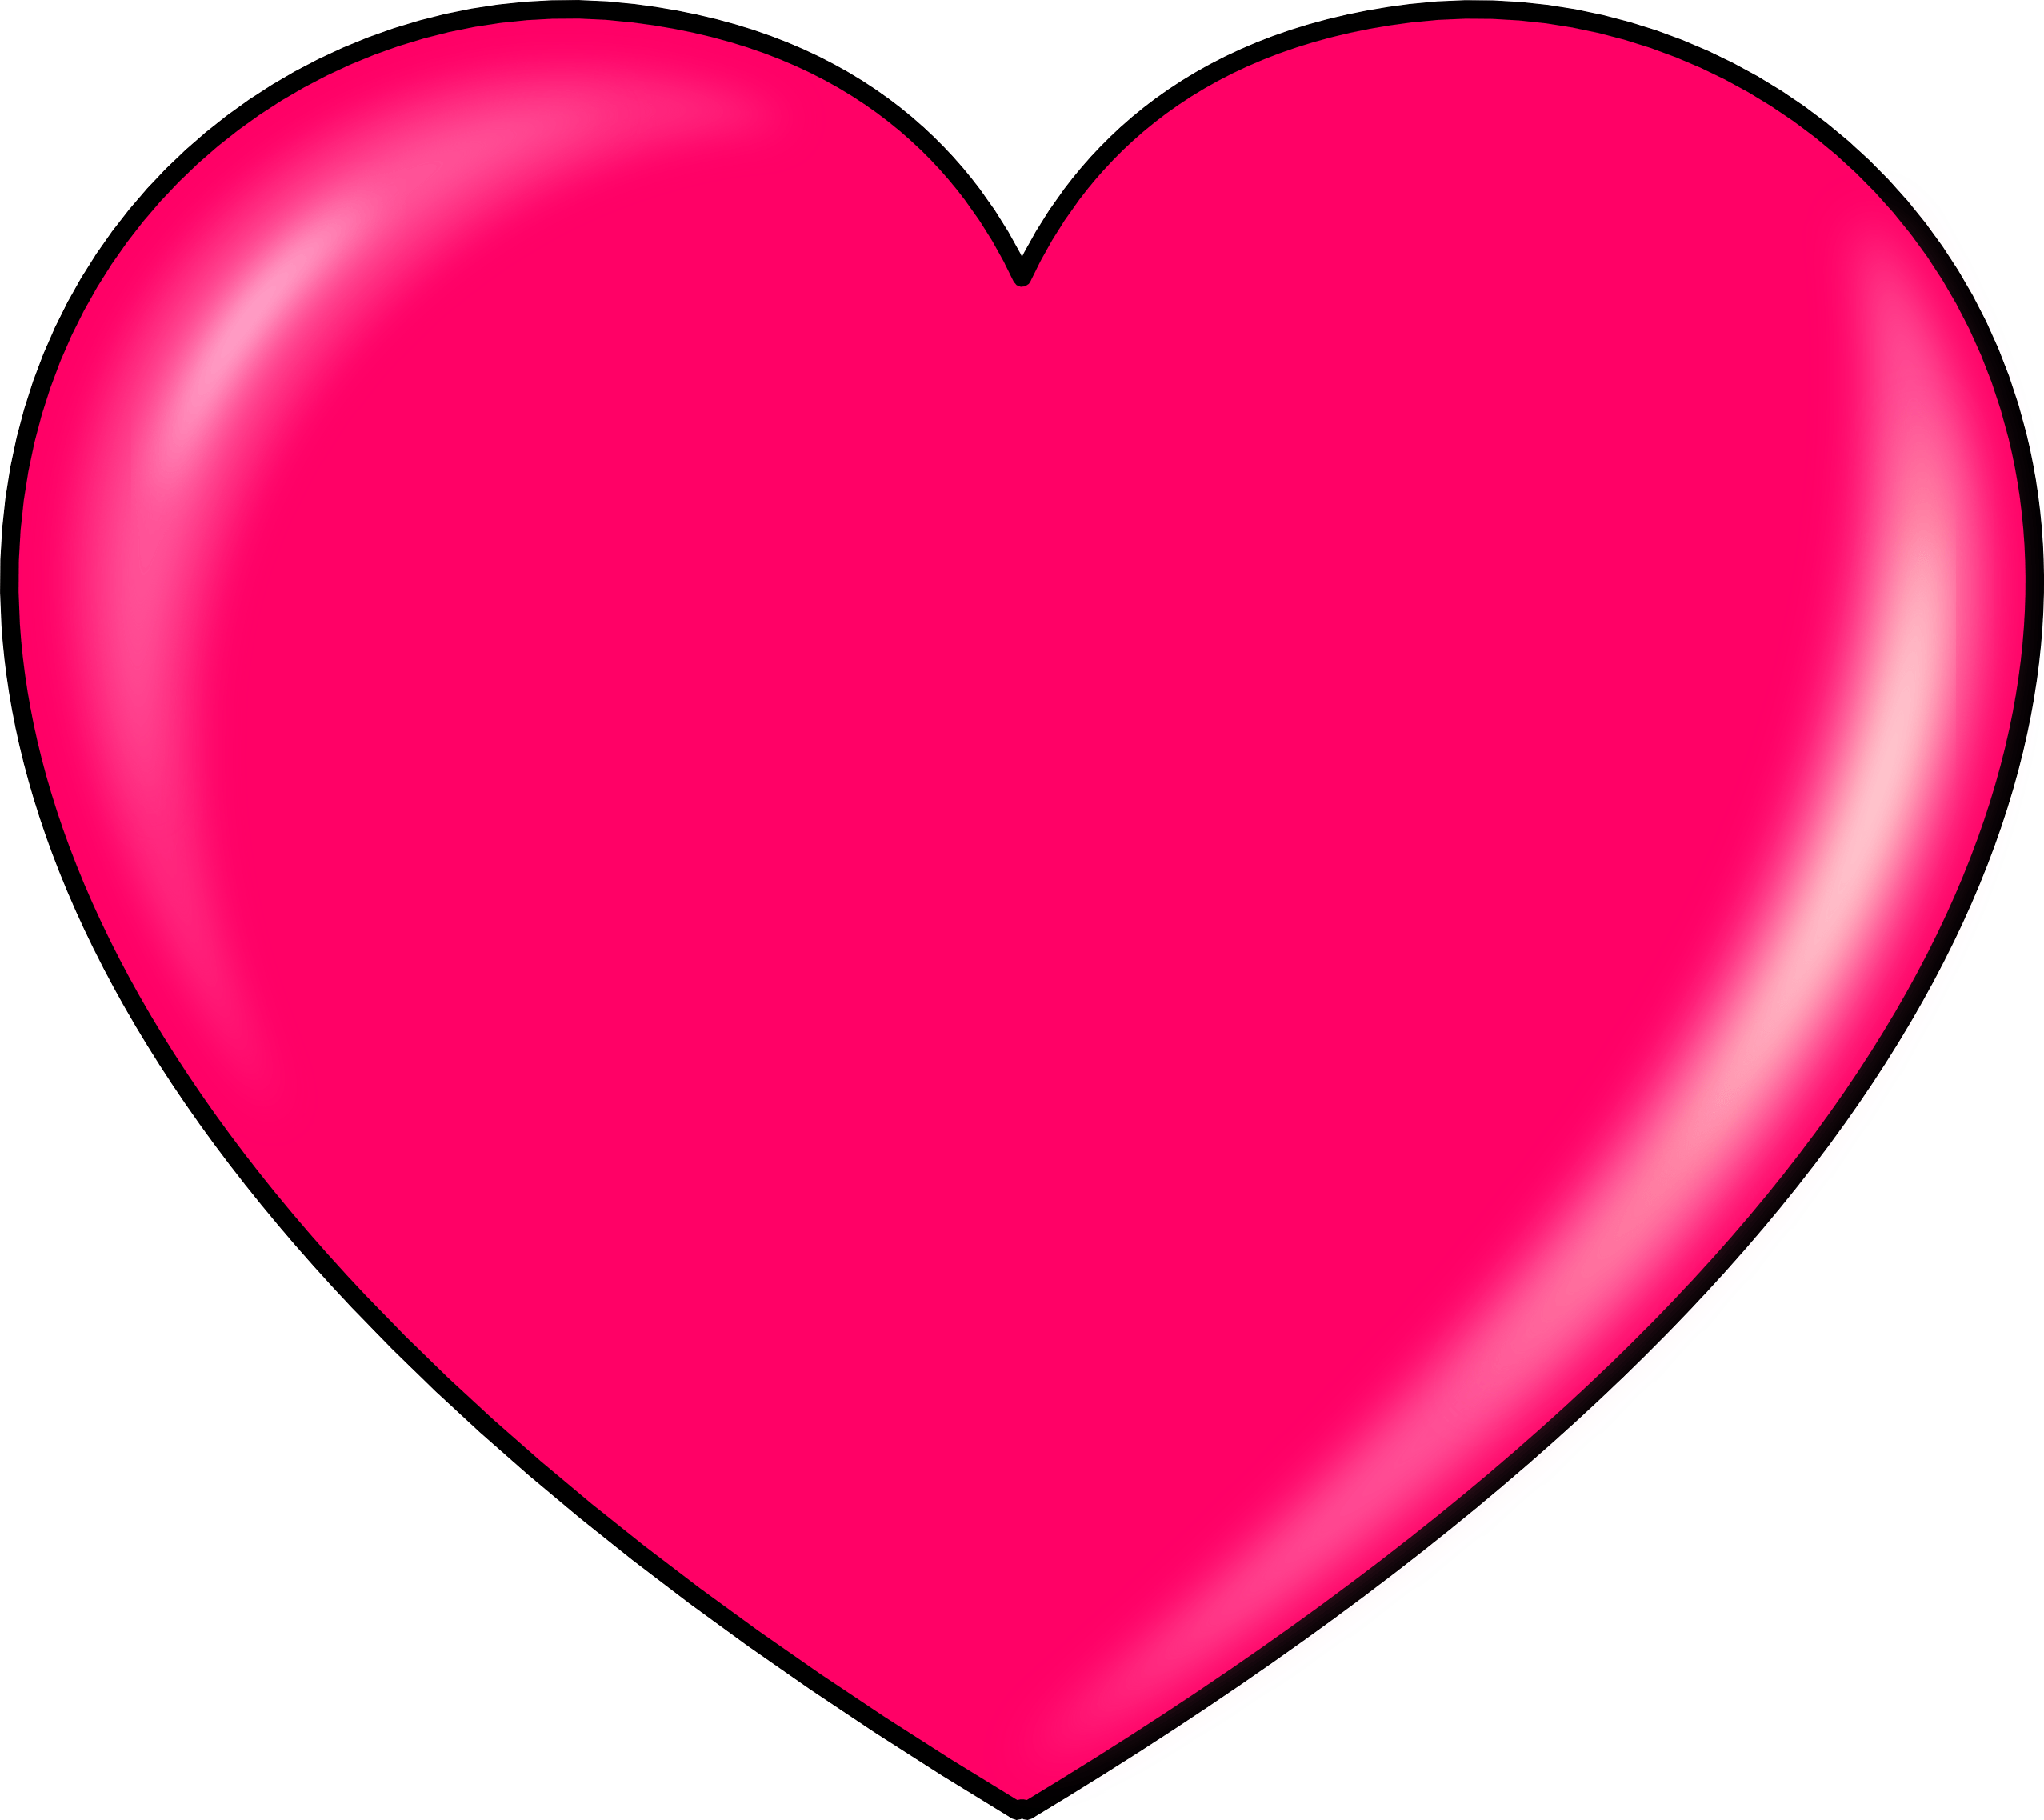 Pink Heart Png Image Download PNG Image